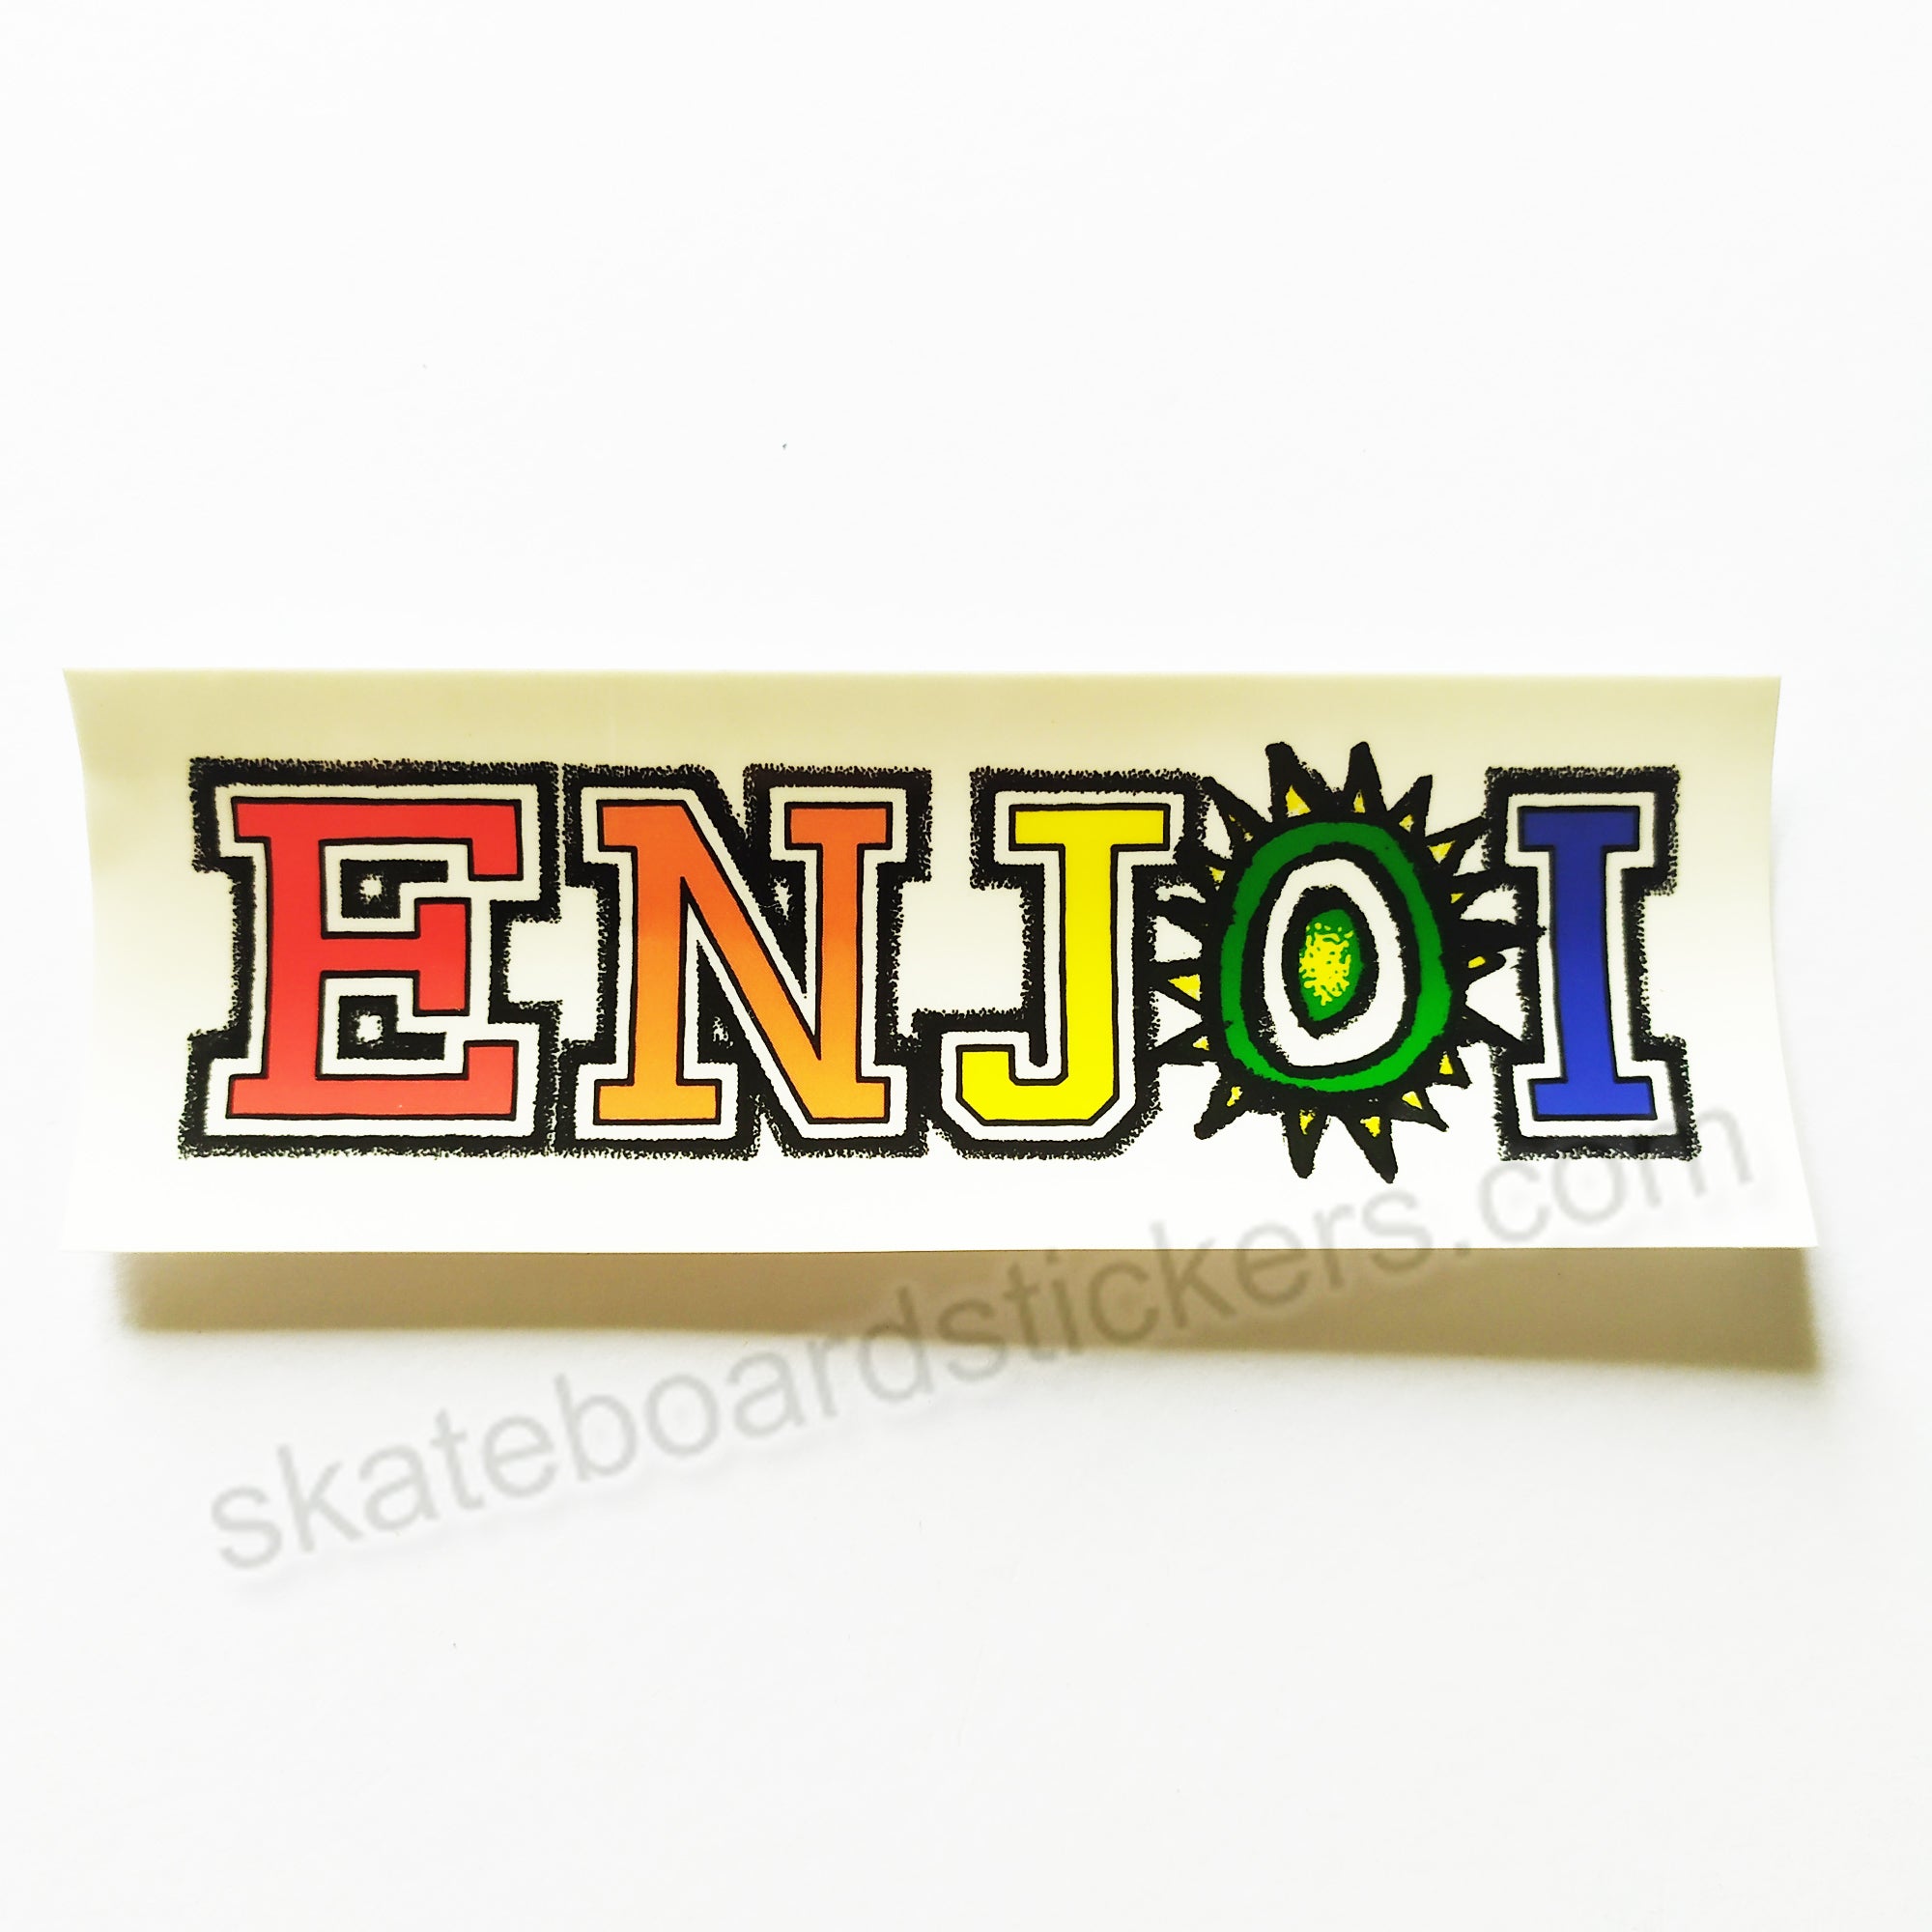 Enjoi Skateboard Sticker - SkateboardStickers.com